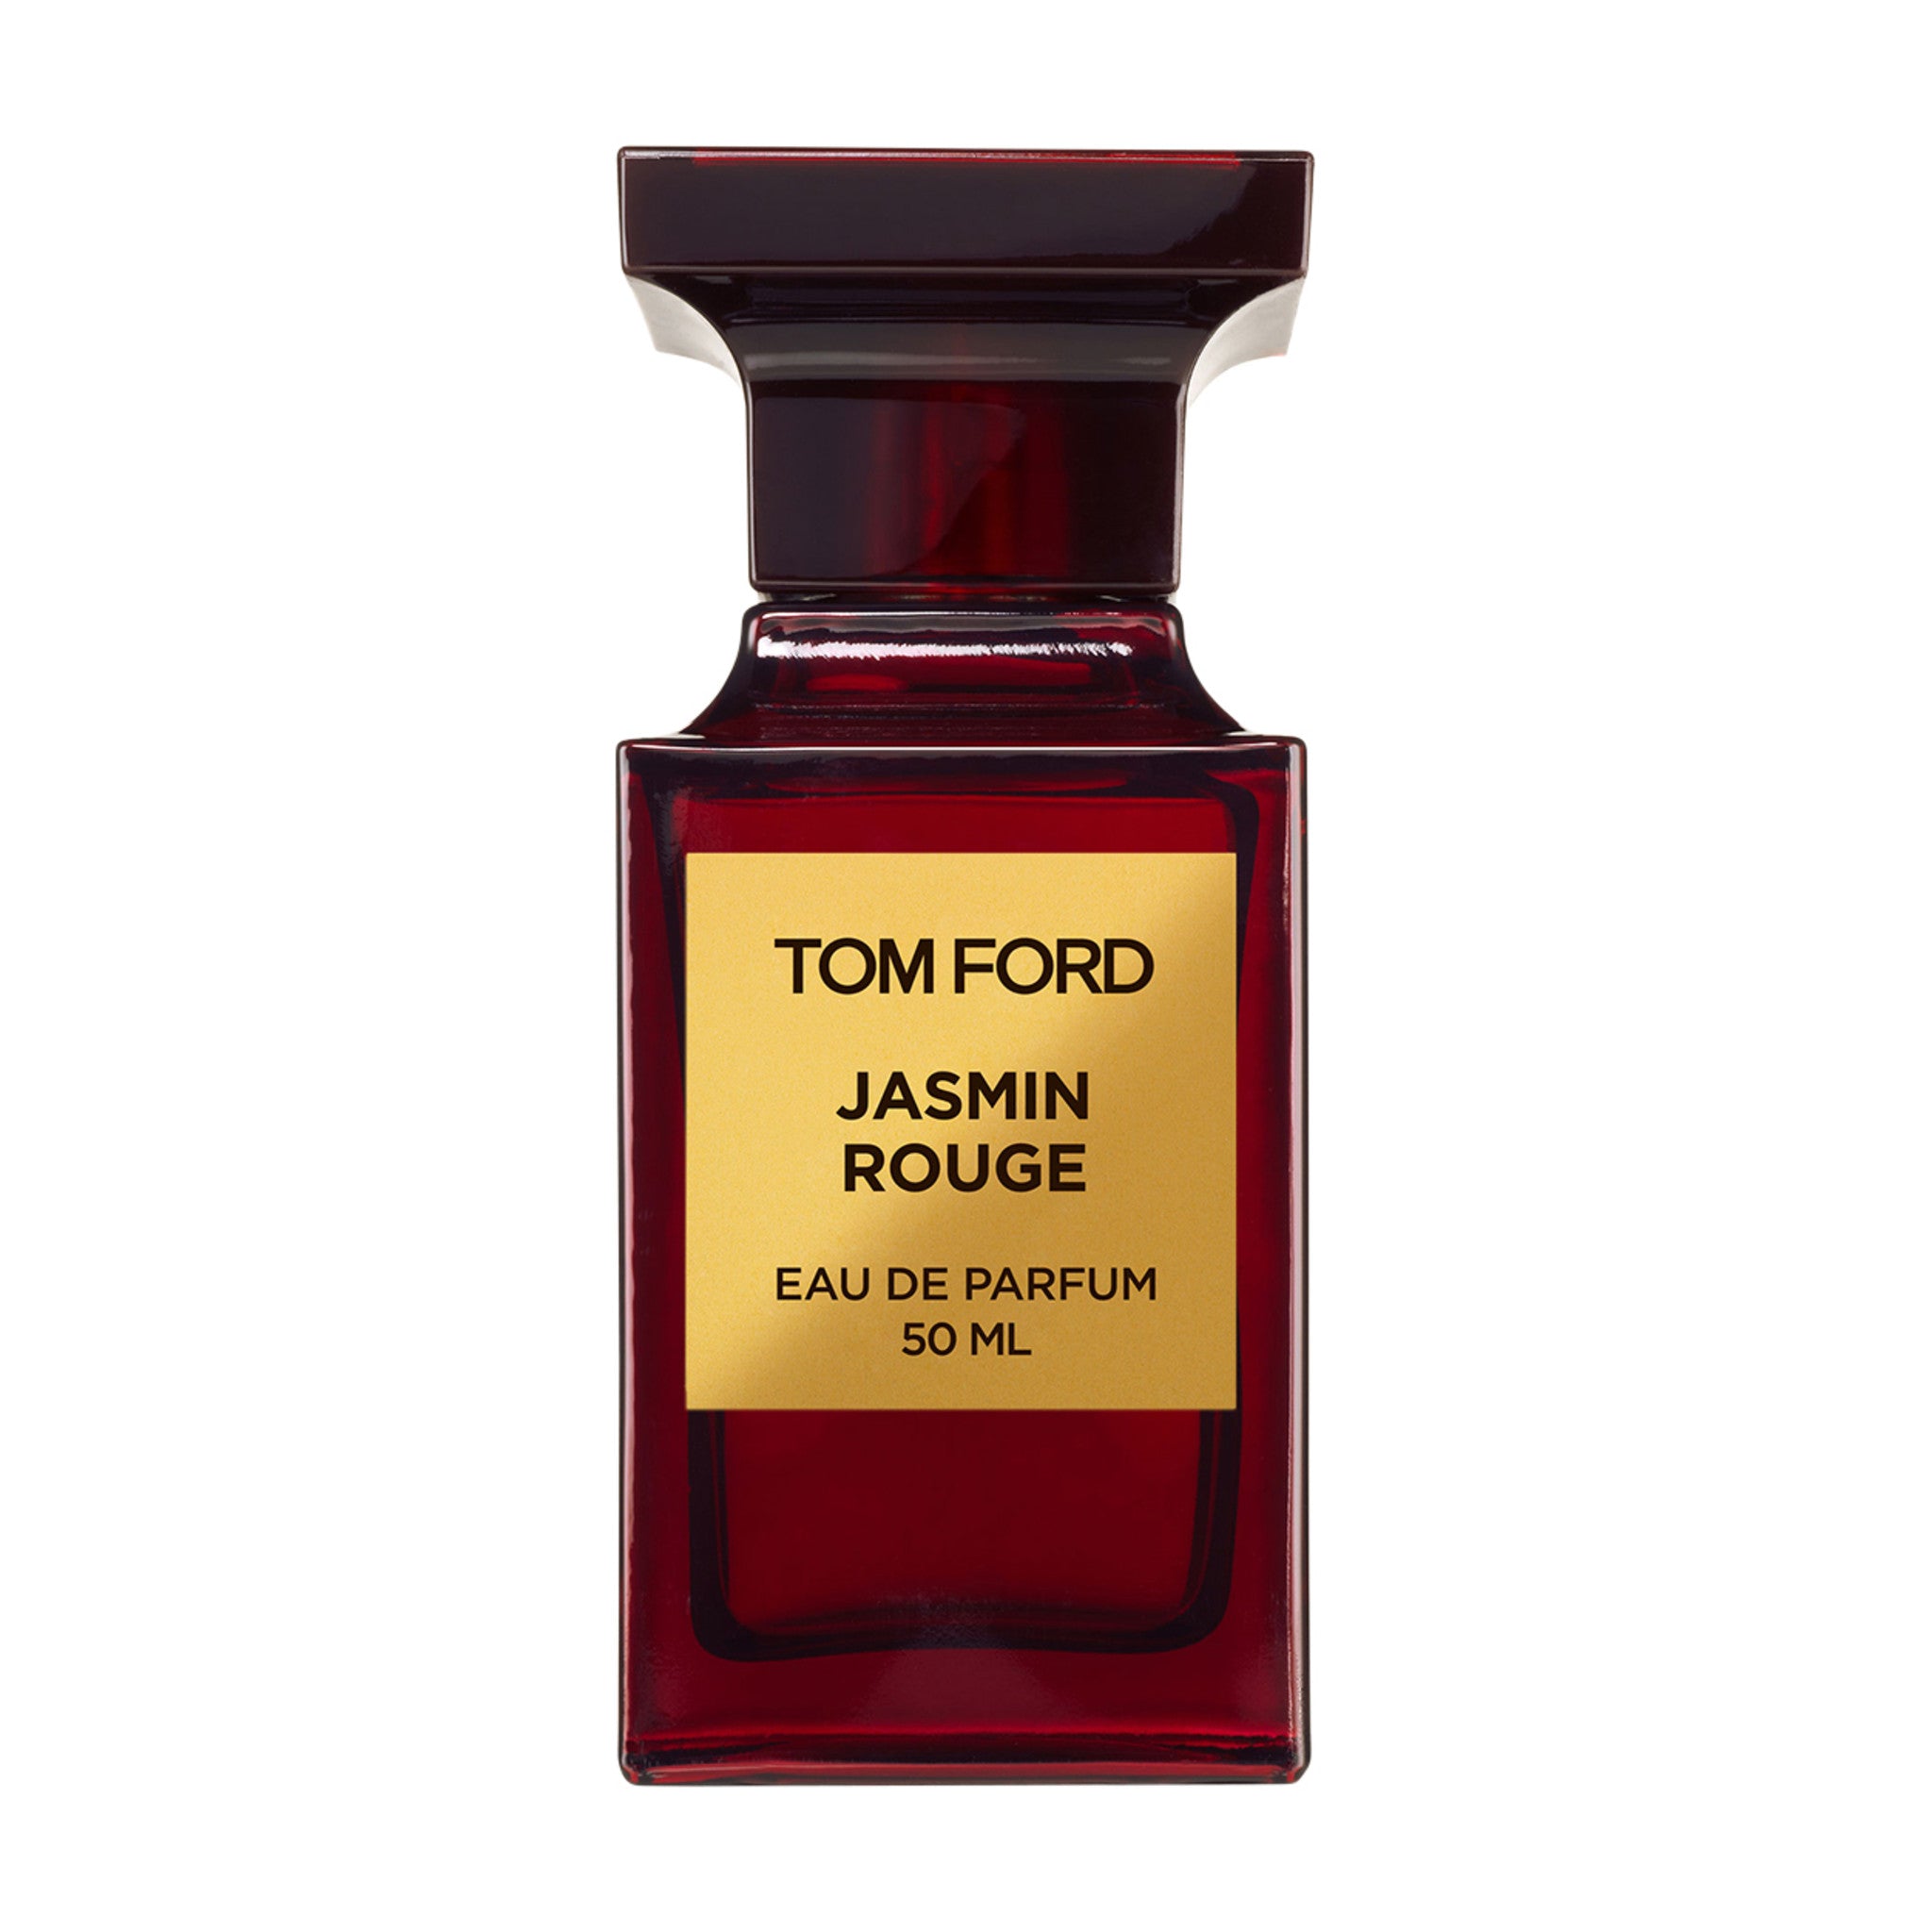 Tom Ford Jasmin Rouge Eau de Parfum Spray Size variant: 1.7 fl oz | 50 ml main image.